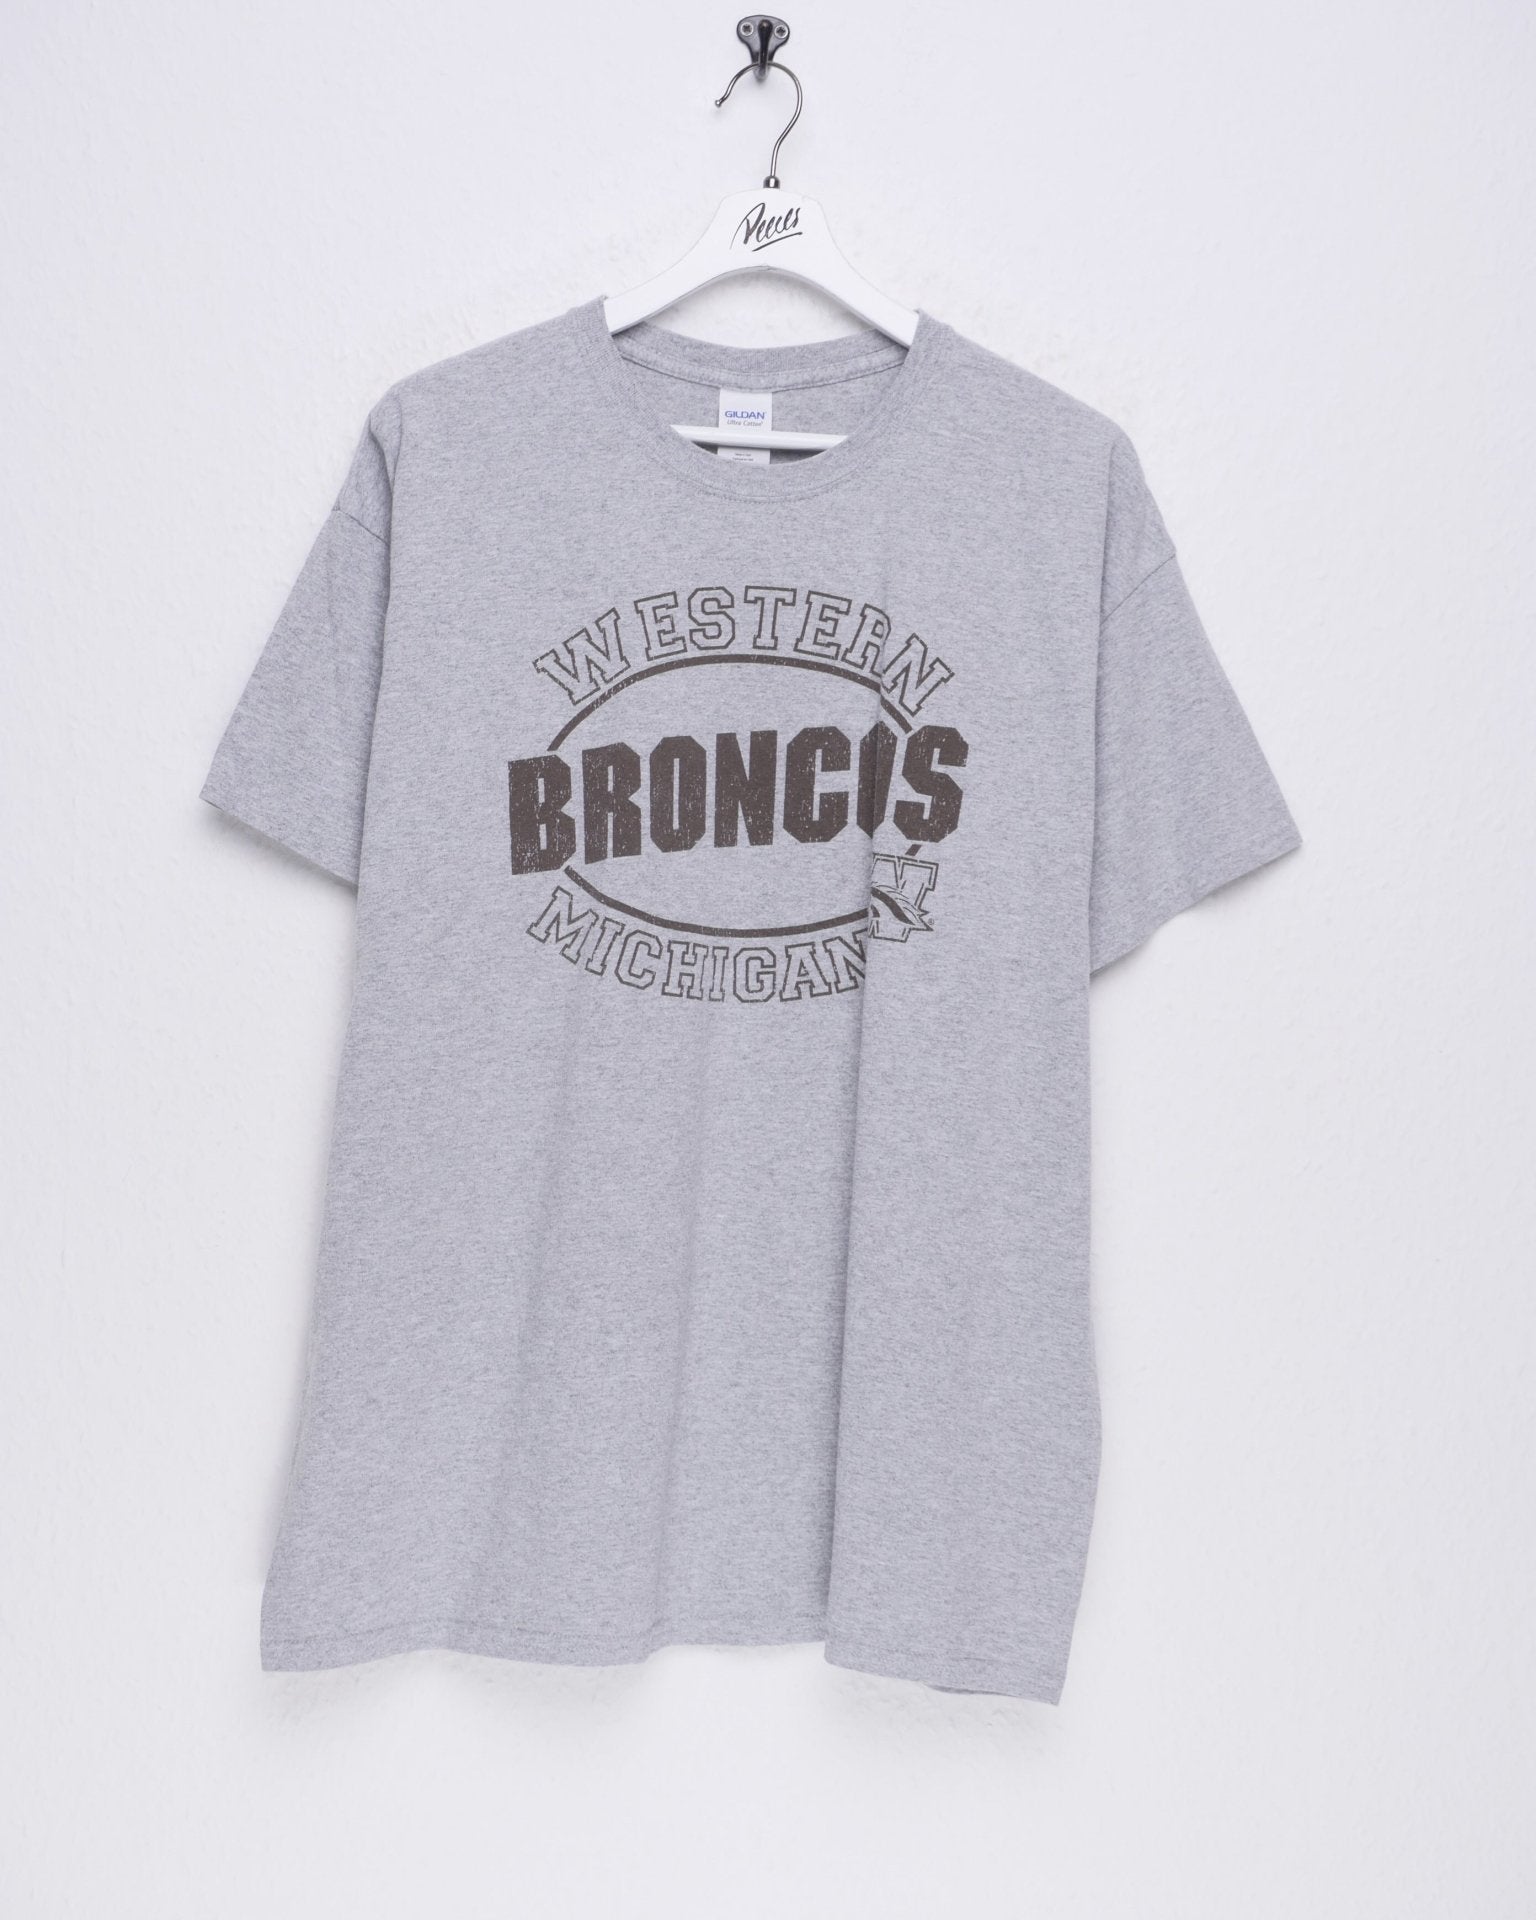 Western Broncos printed Graphic Vintage Shirt - Peeces